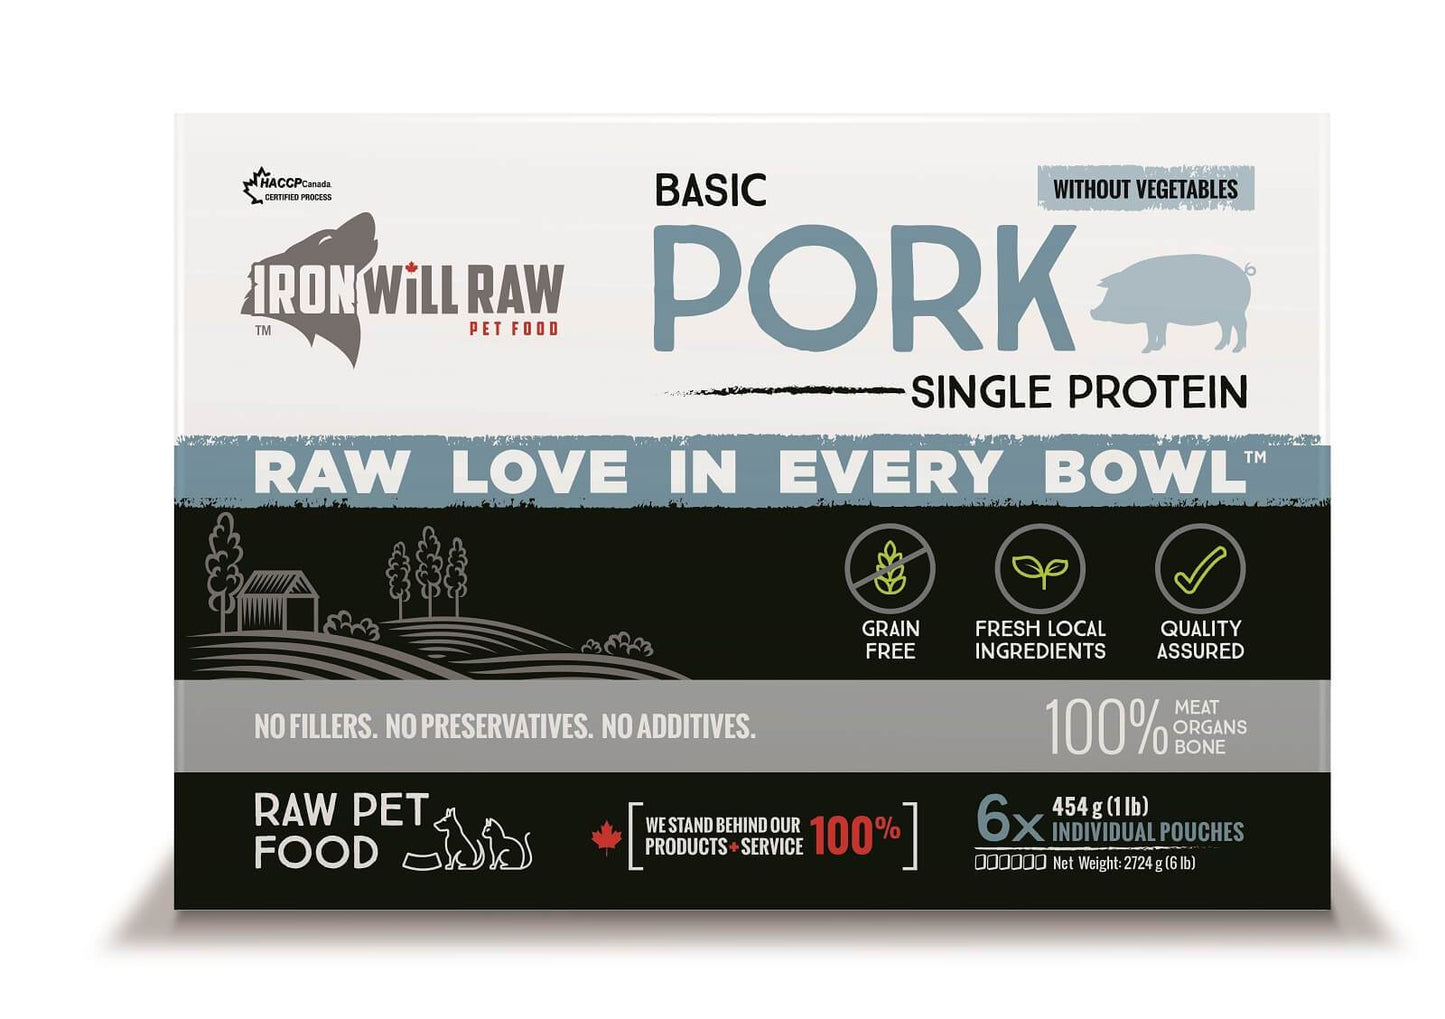 IRON WILL RAW - BASIC PORK - 6LB - Woofur Natural Pet Products